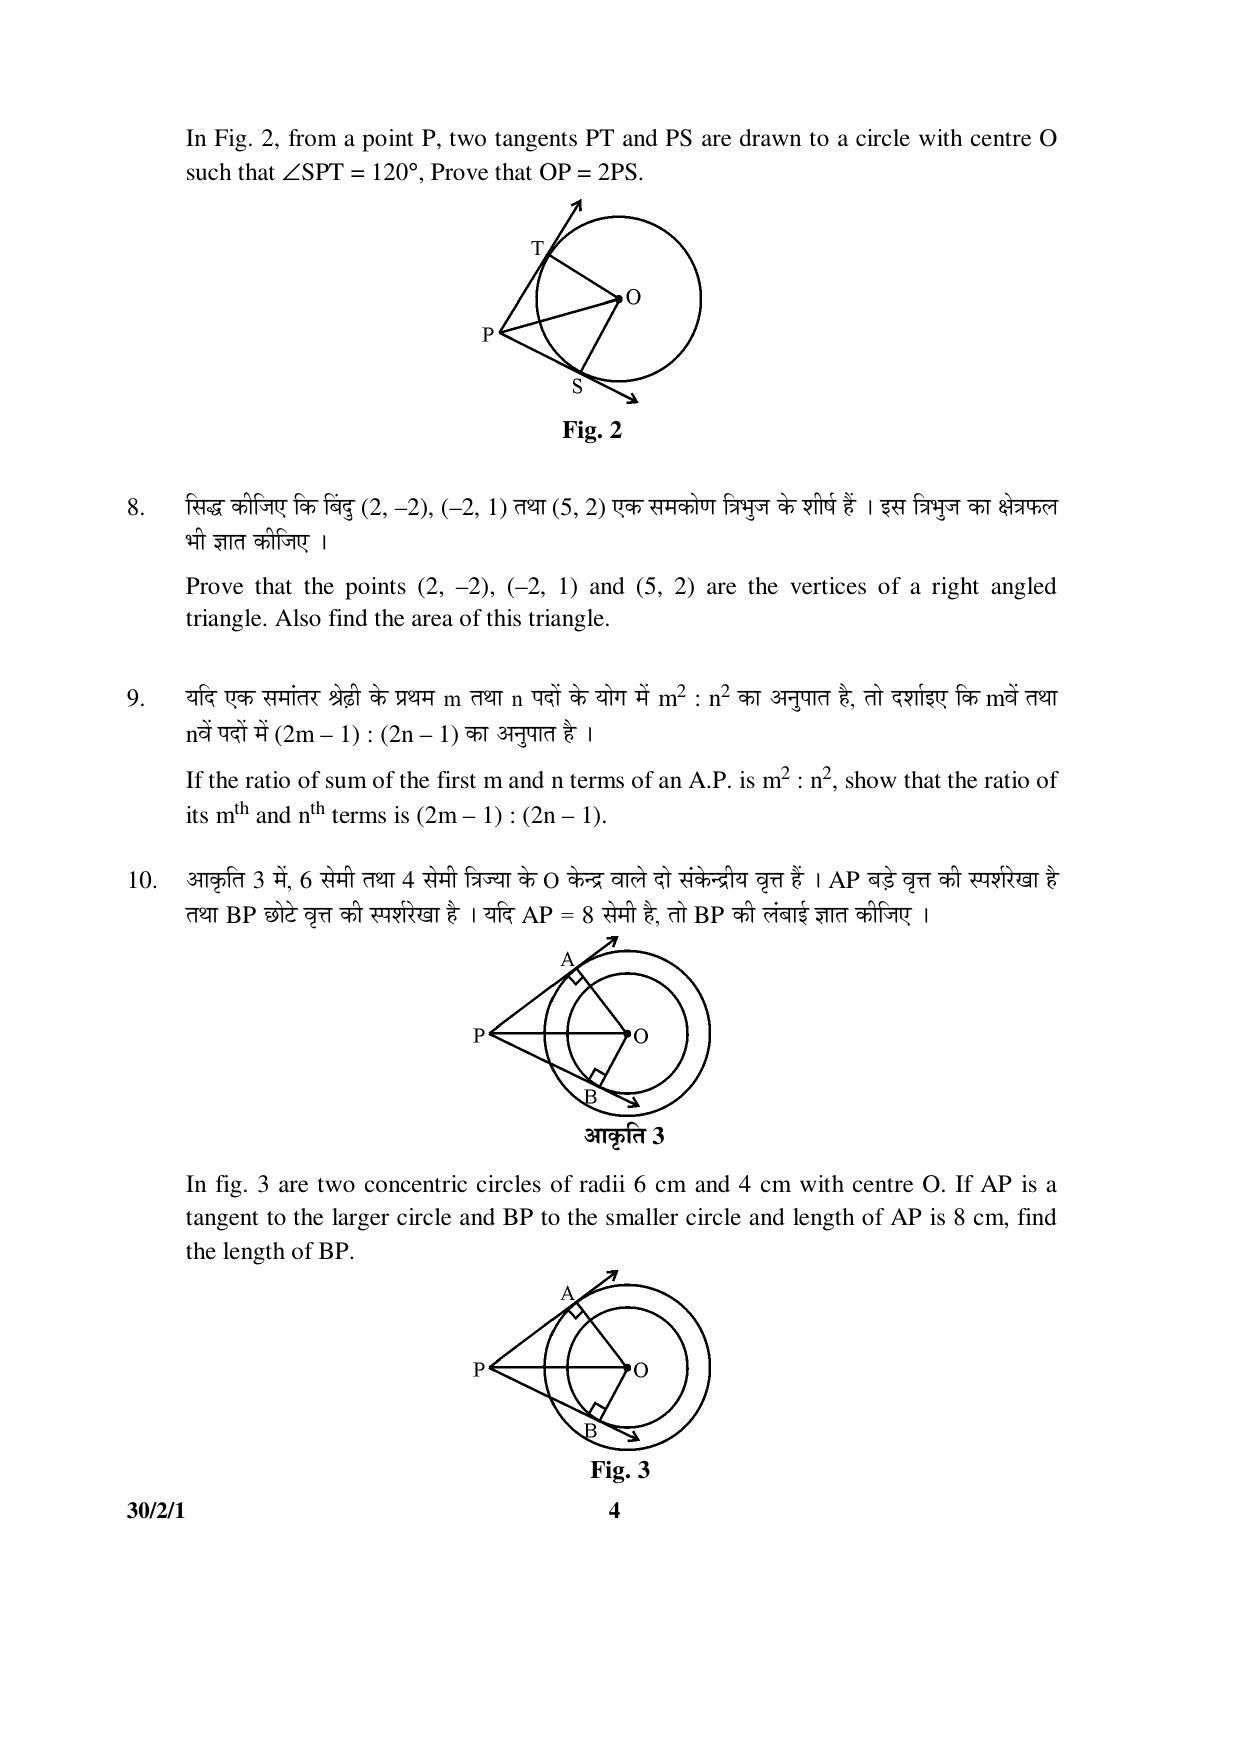 CBSE Class 10 30-2-1 _Mathematics 2016 Question Paper - Page 4